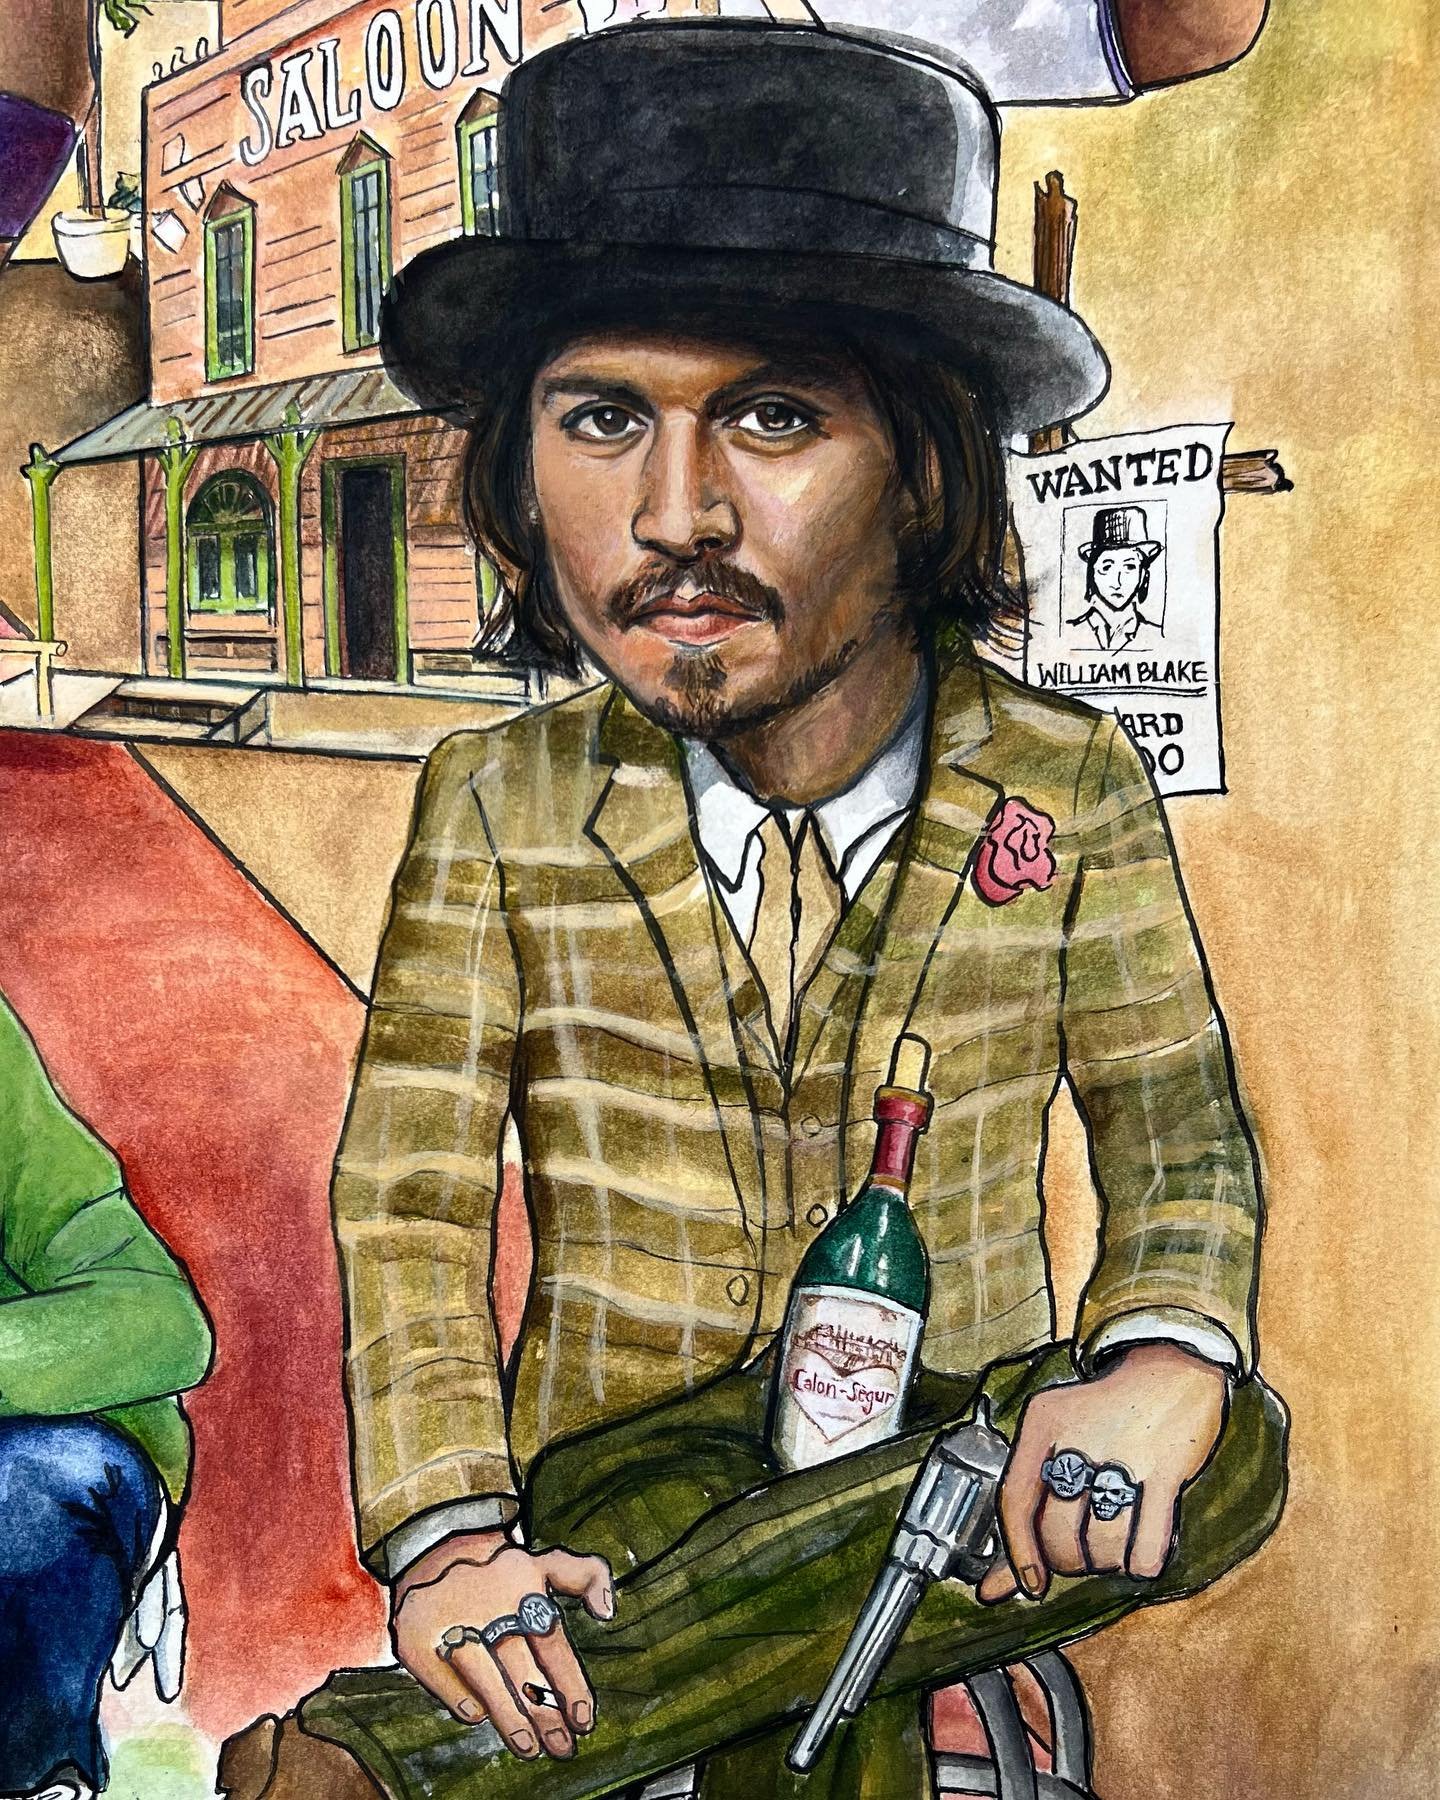 Johnny Depp🎩 at @drakeshollywood. #DeadMan #art #westhollywood #watercolor #ink #williamblake #jimjaurmusch